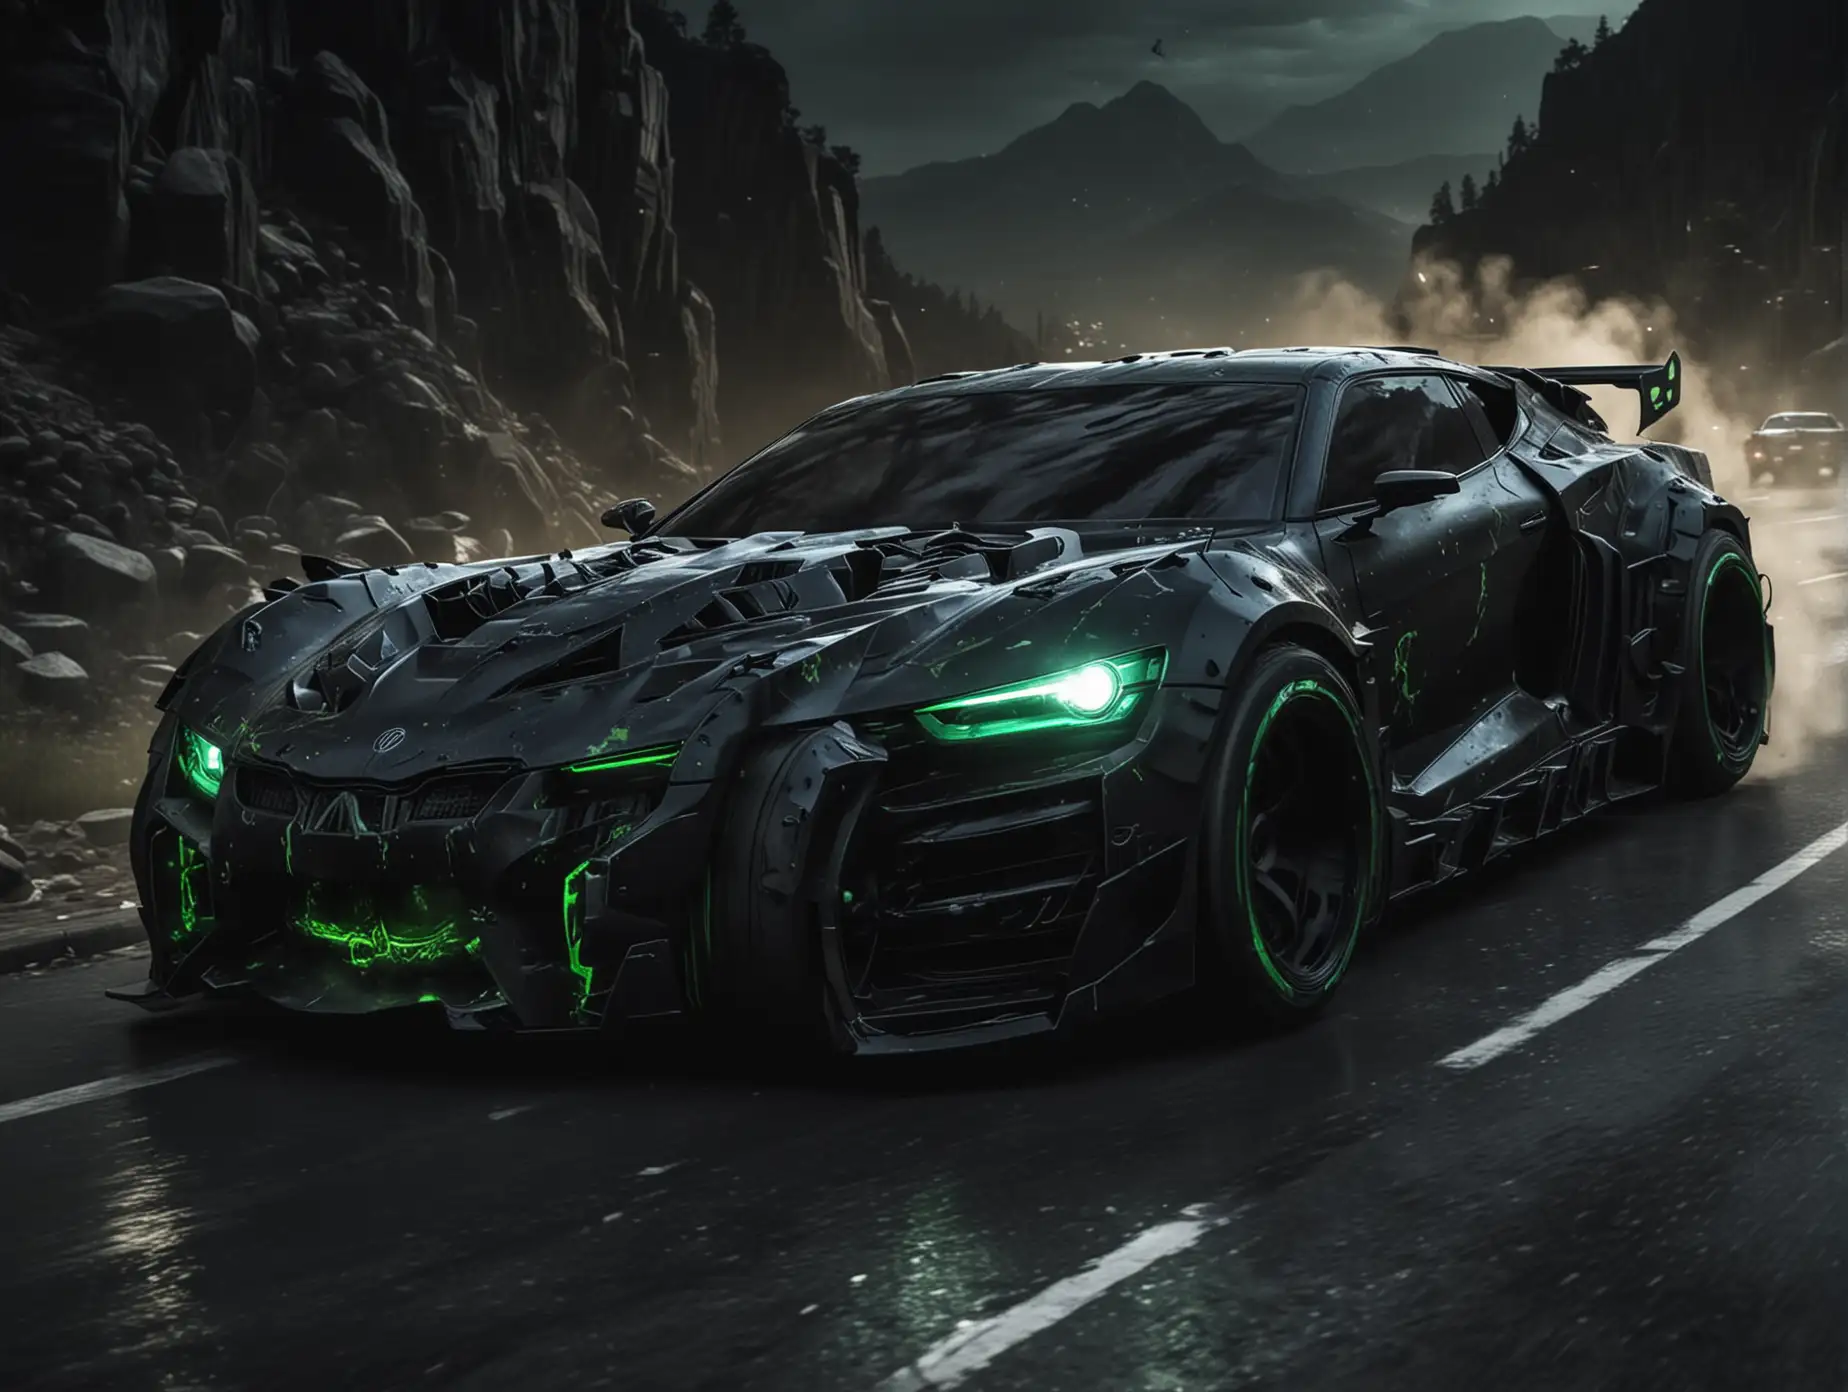 Futuristic-Dark-Spiderman-and-Hulk-Evil-Tuning-Drift-Cars-at-Night